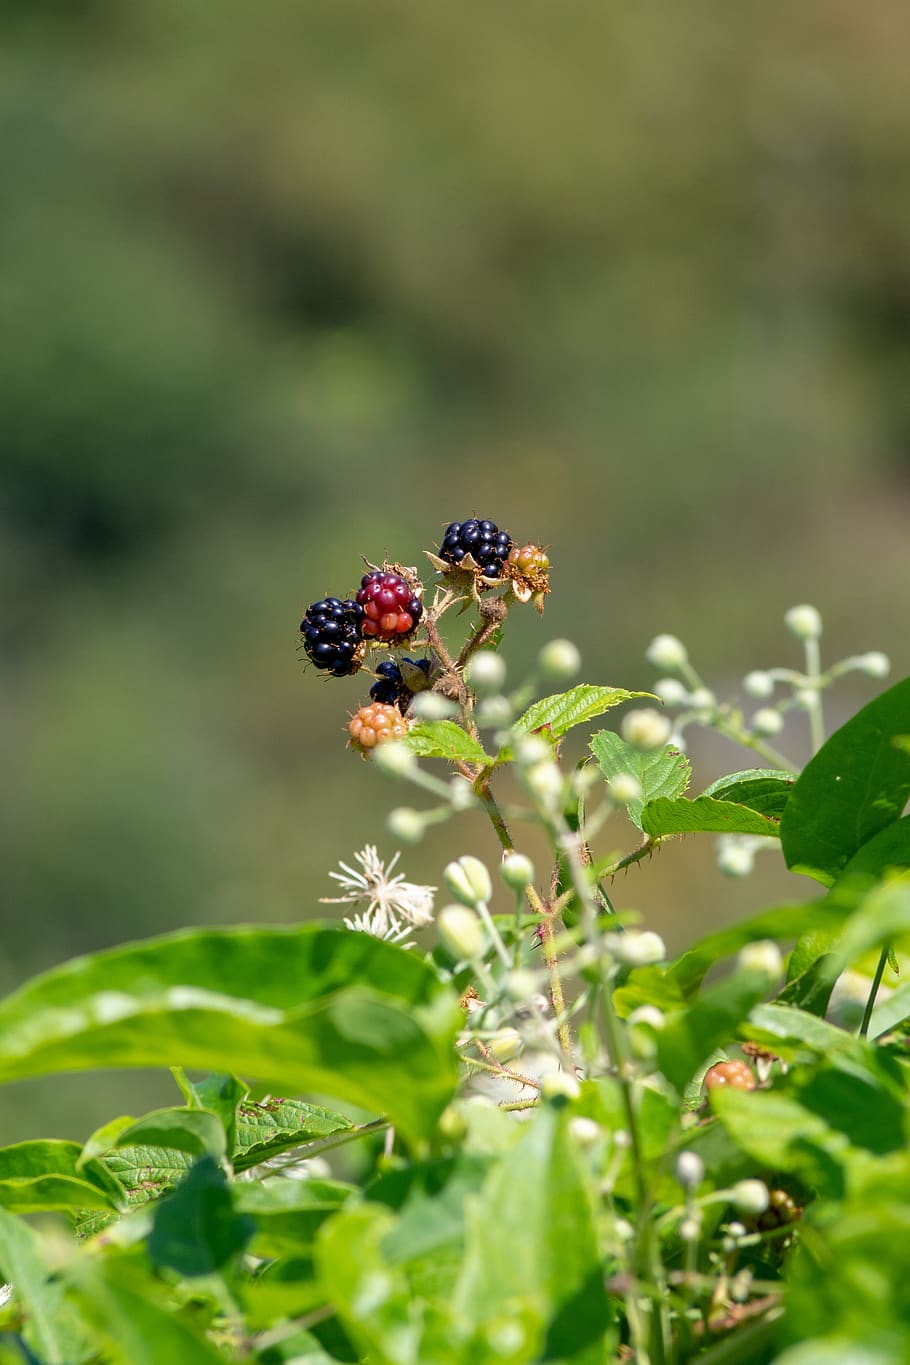 blackberry, bush, berries, leaves, bramble, fruit, immature, plant, invertebrate, insect